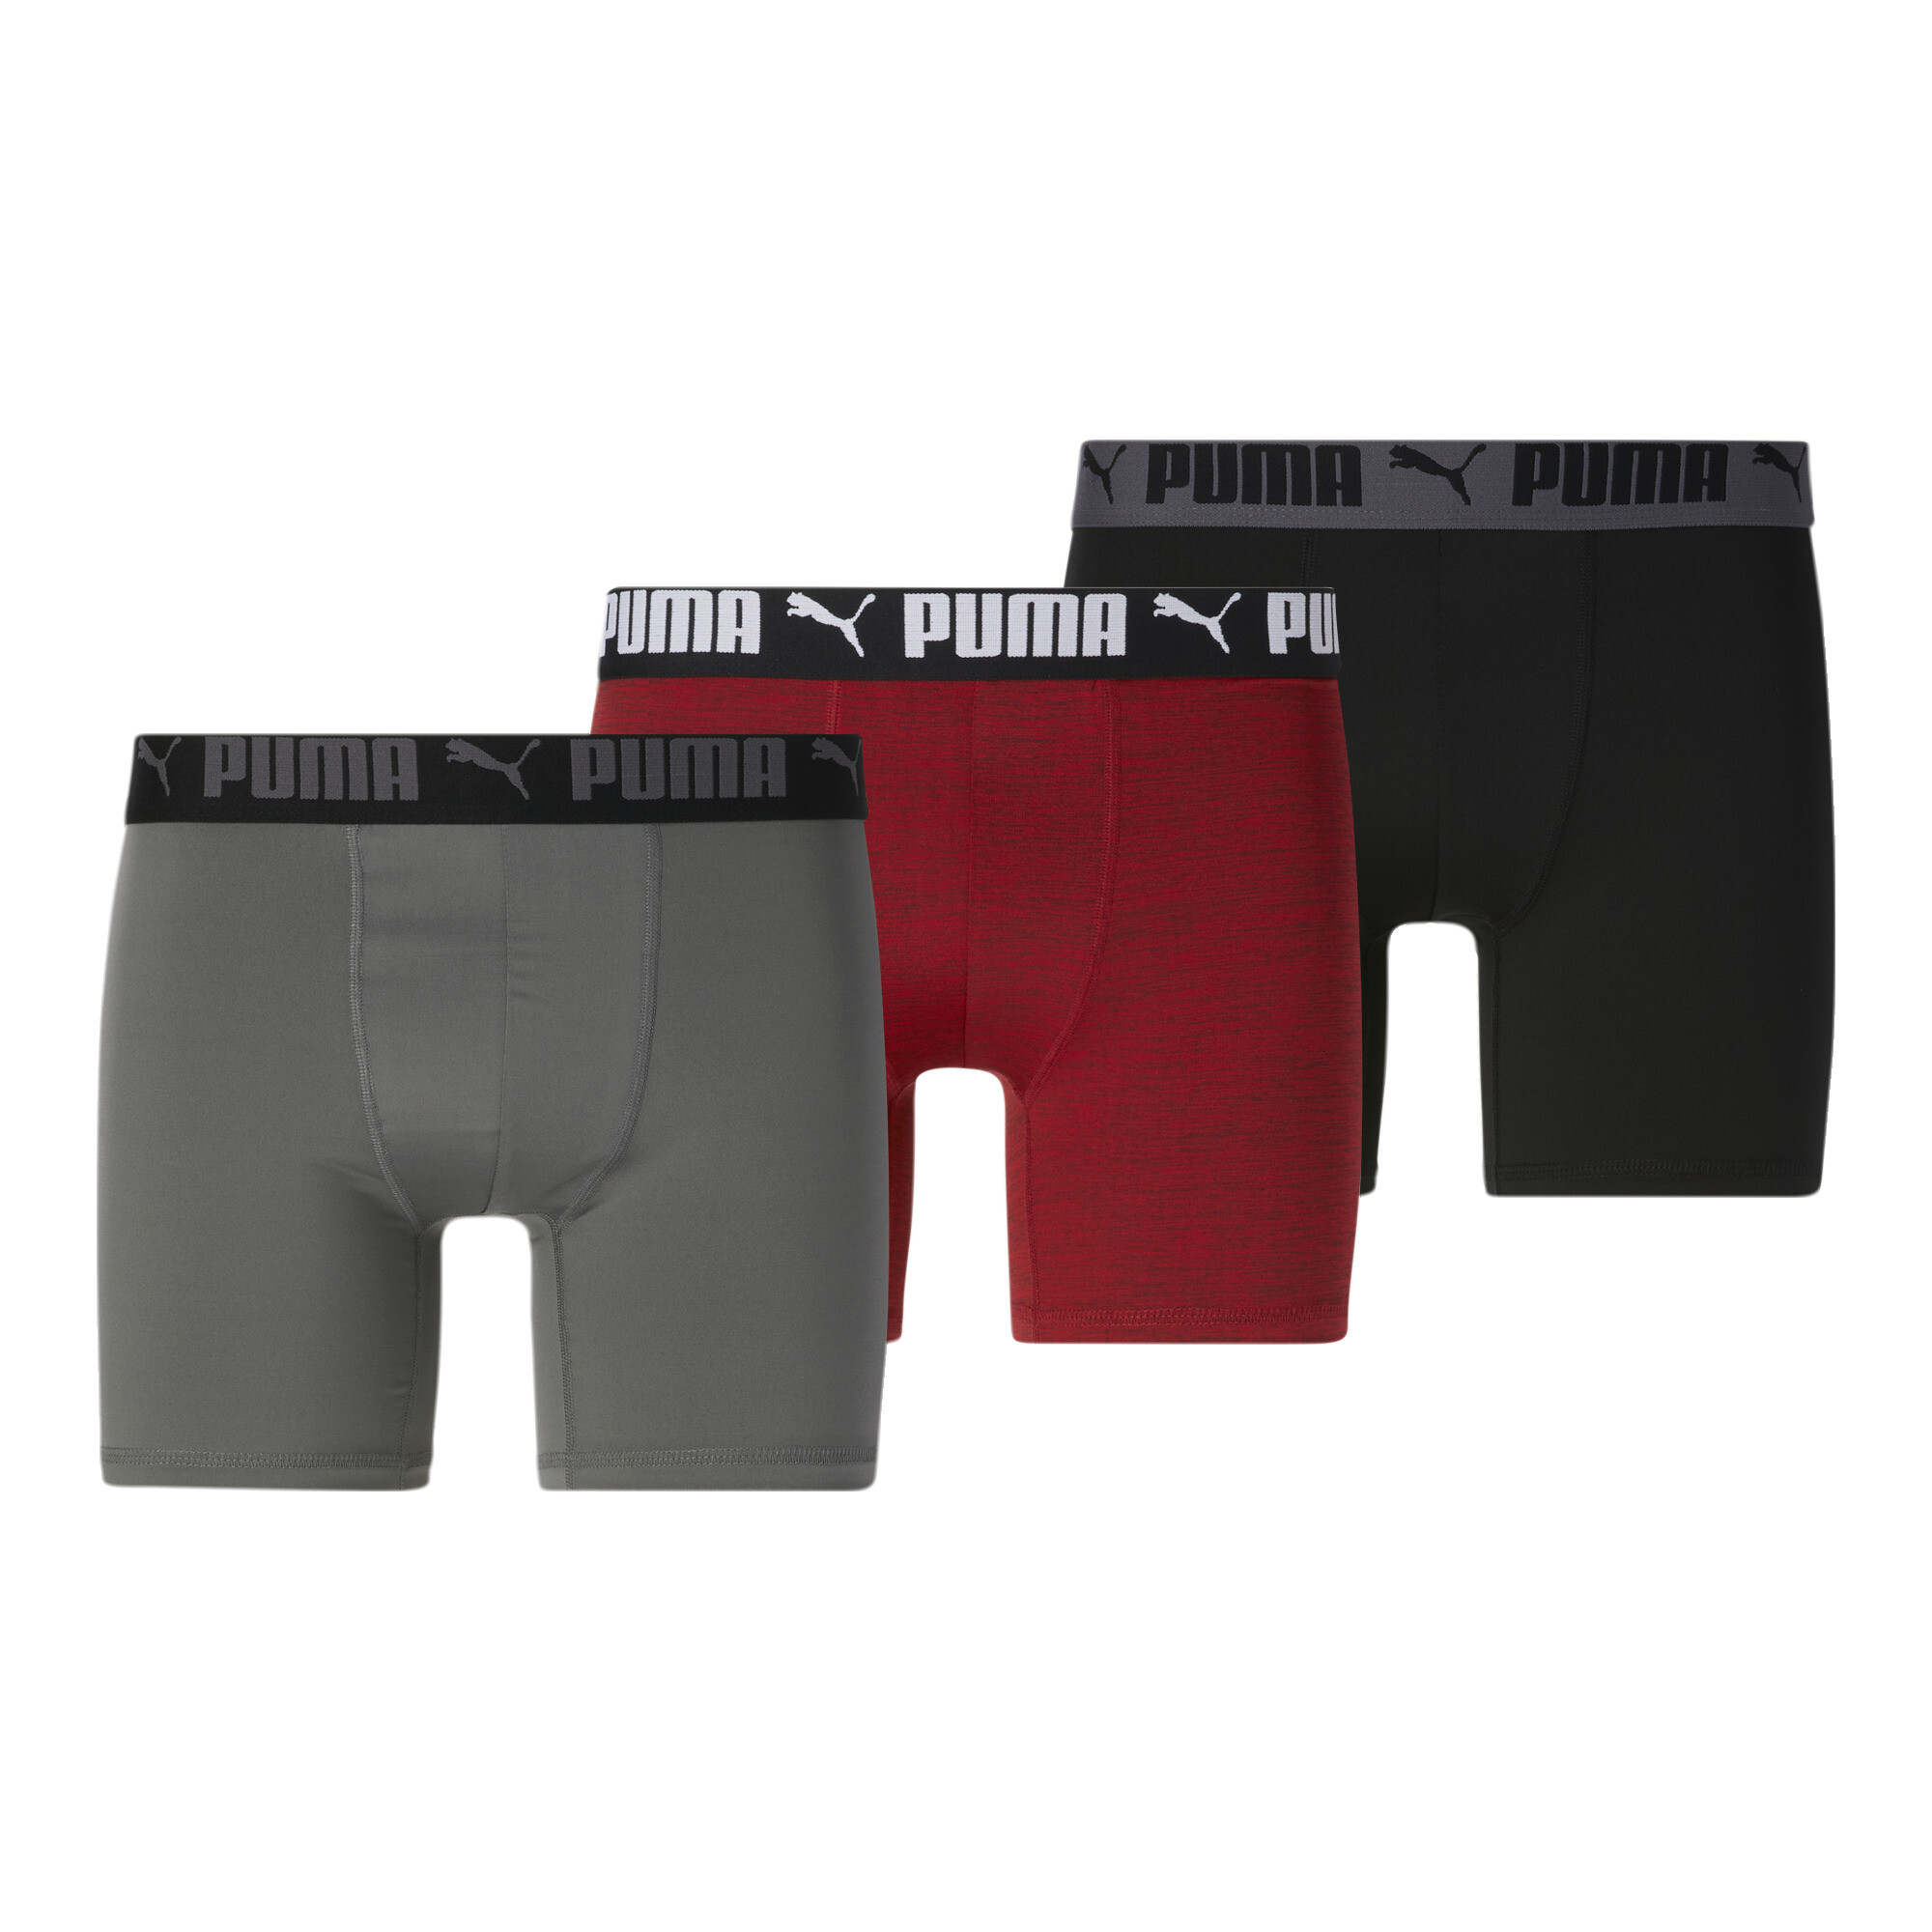 PUMA Men's Boxer Briefs [3 | eBay